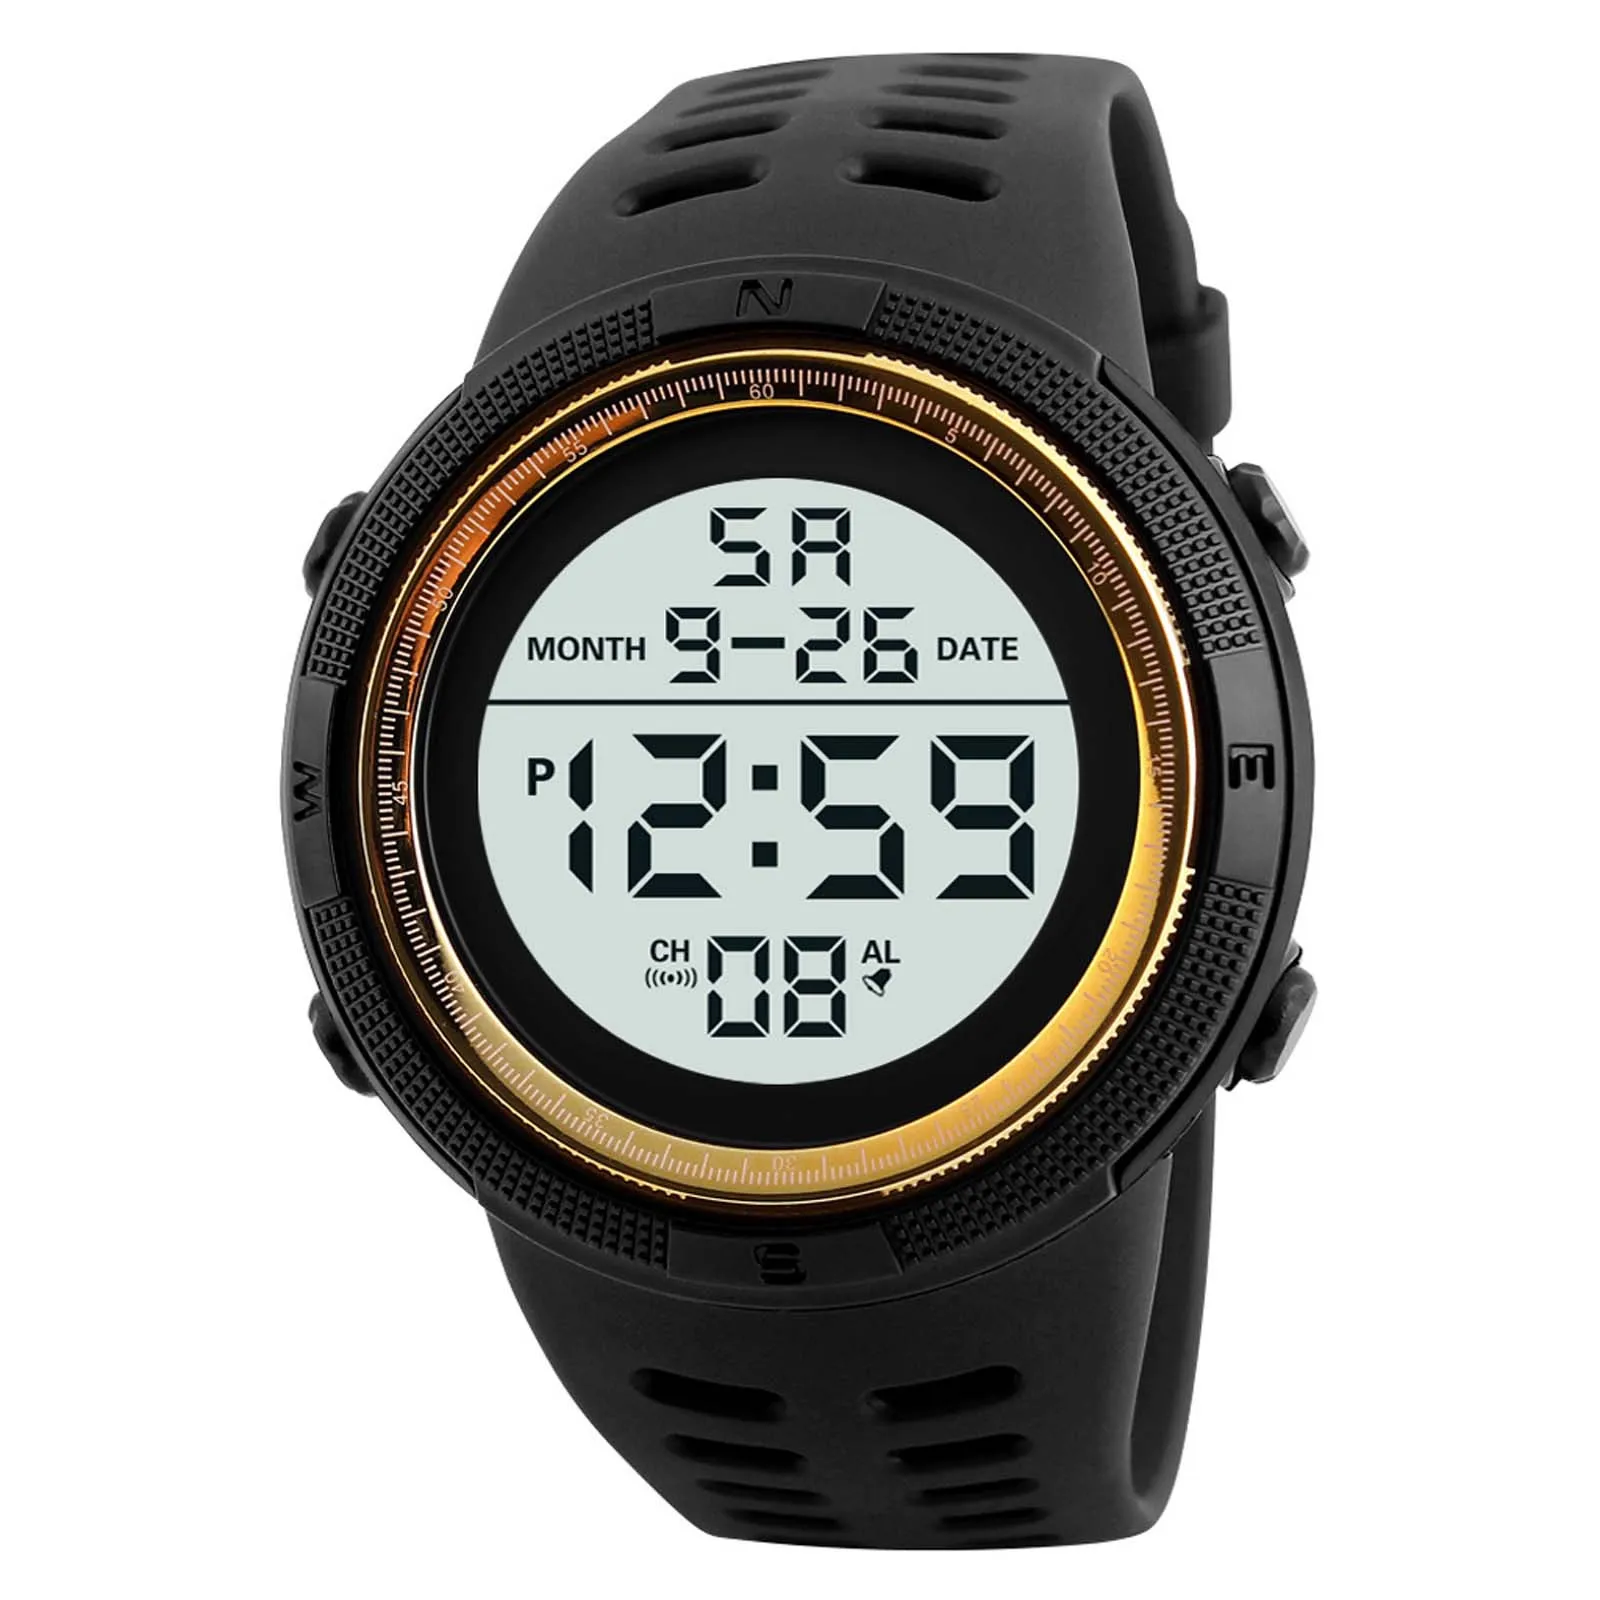 

Honhx Luxury Mens Digital Led Watch Date Sport Men Outdoor Electronic Watch Relogio Masculino Waterproof Watches Часы Мужские На